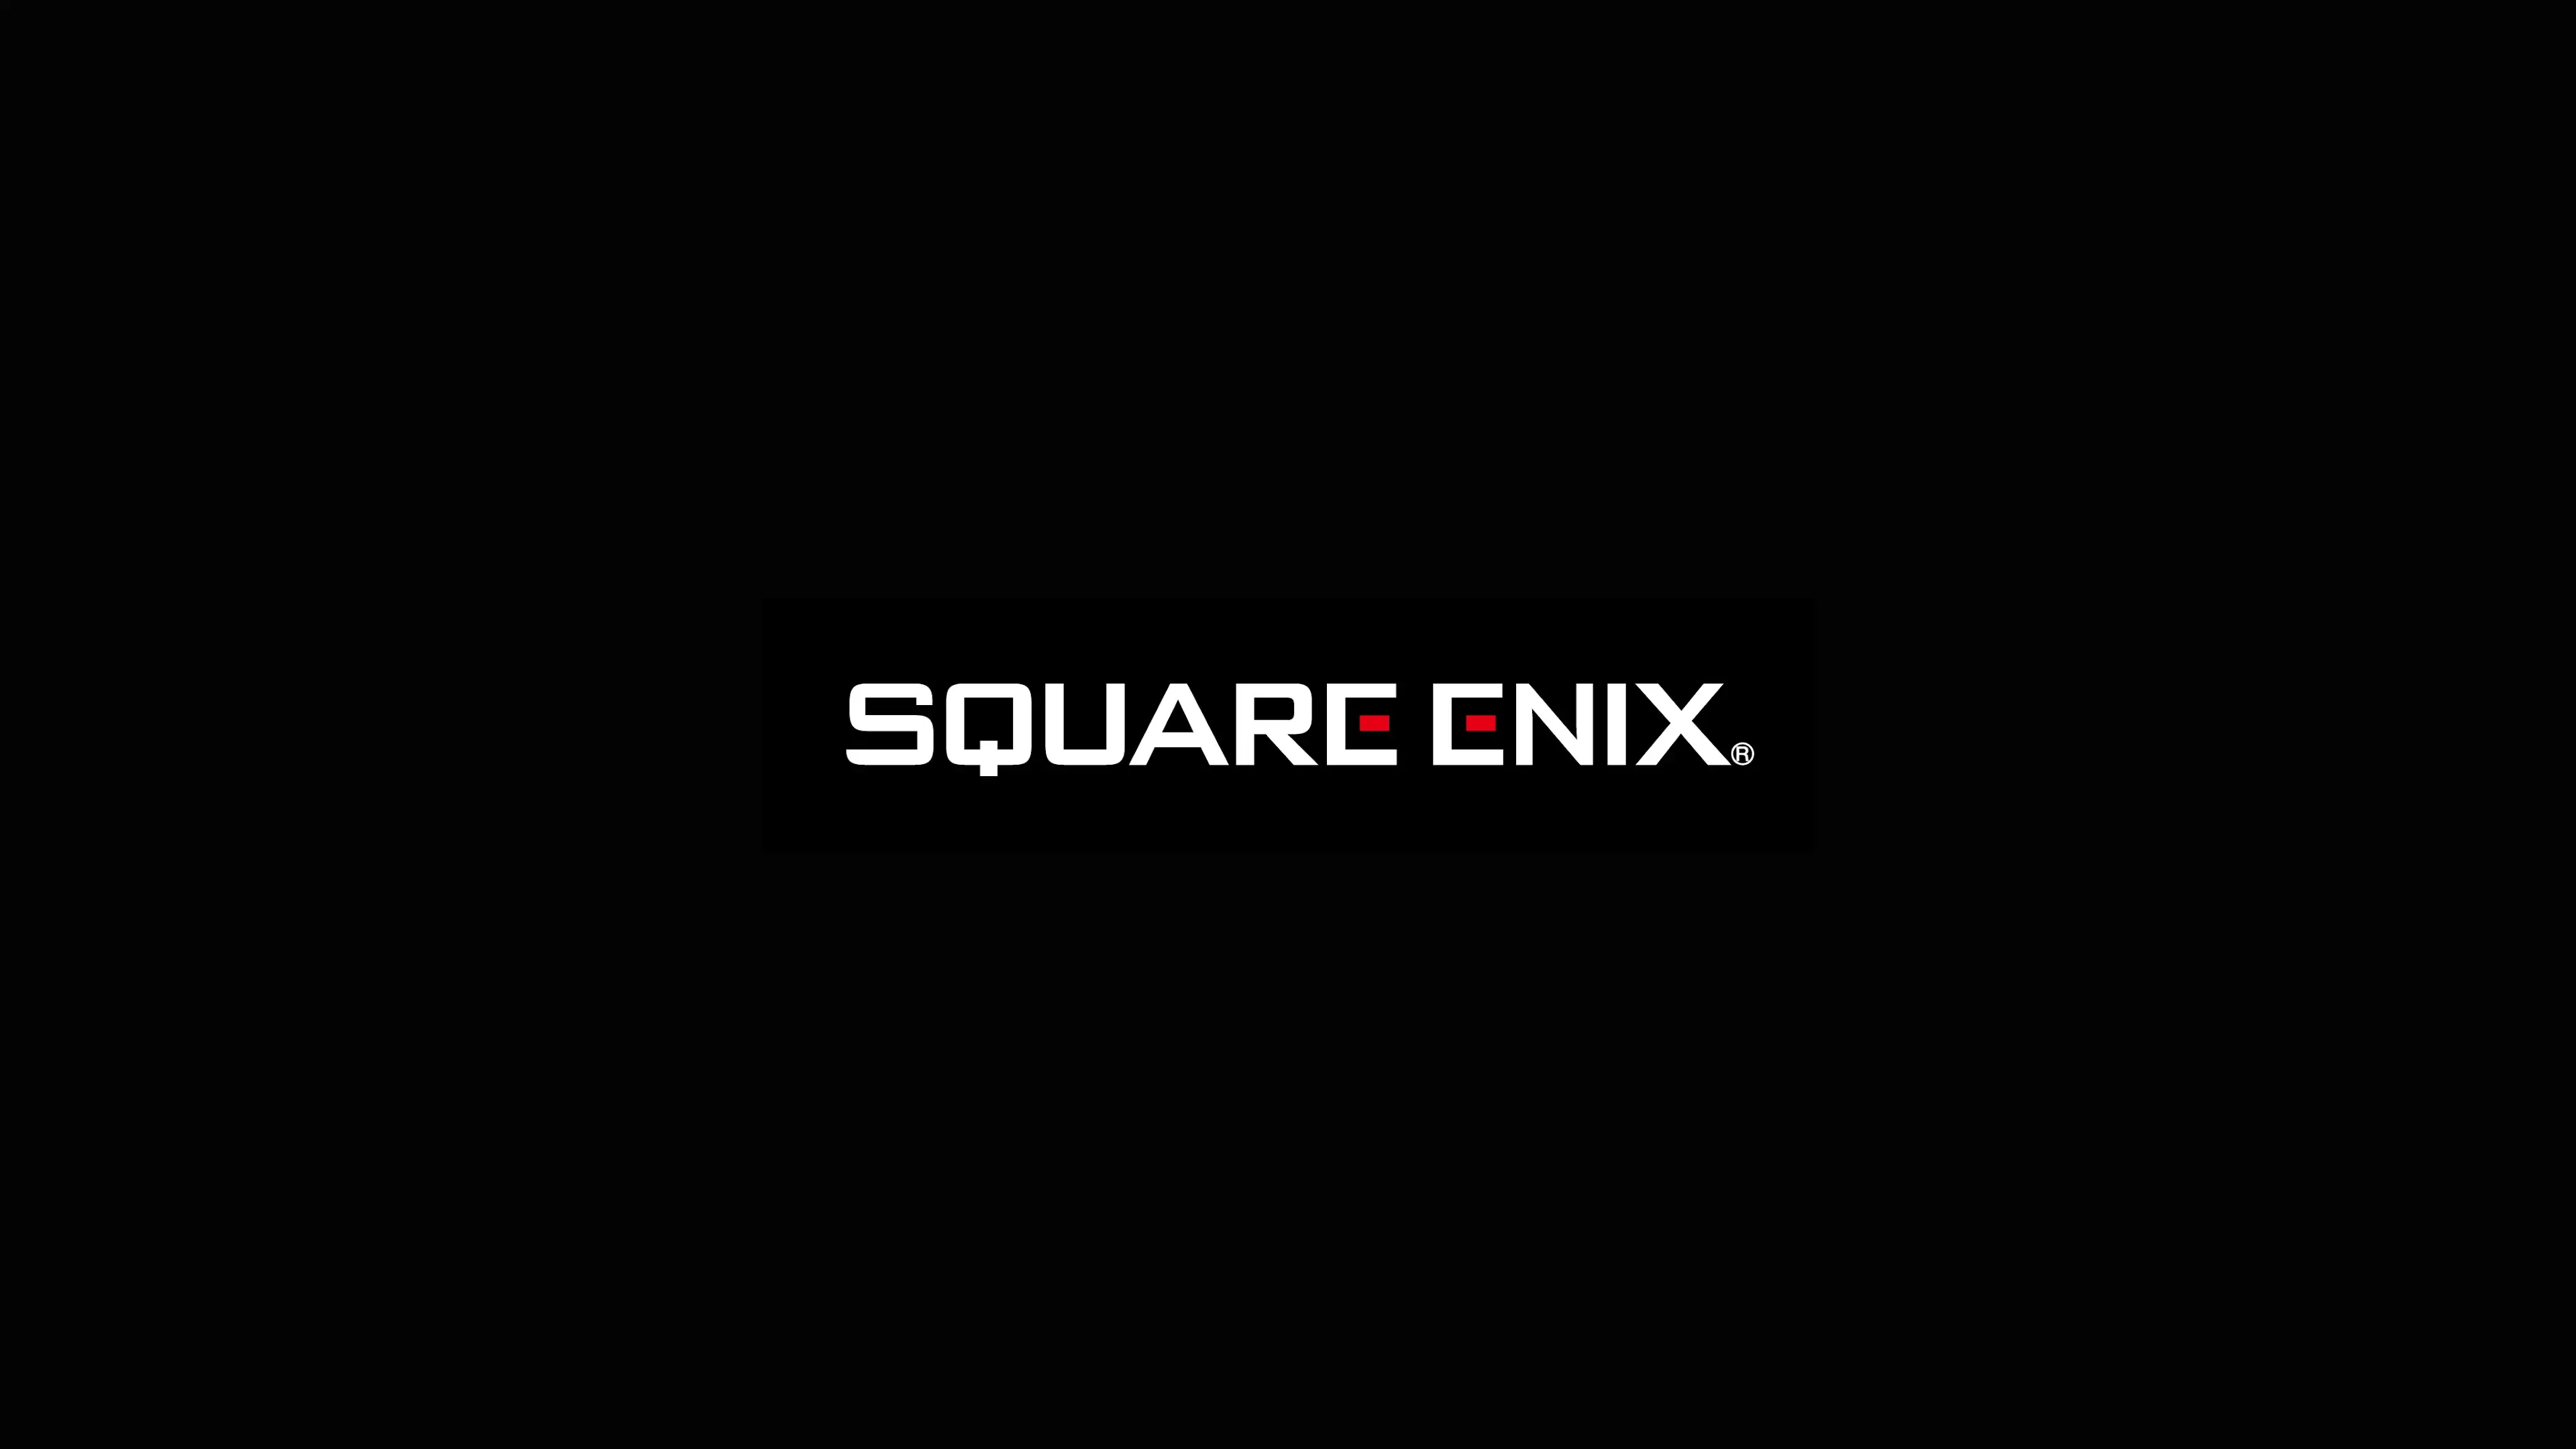 Square Enix Logo Image